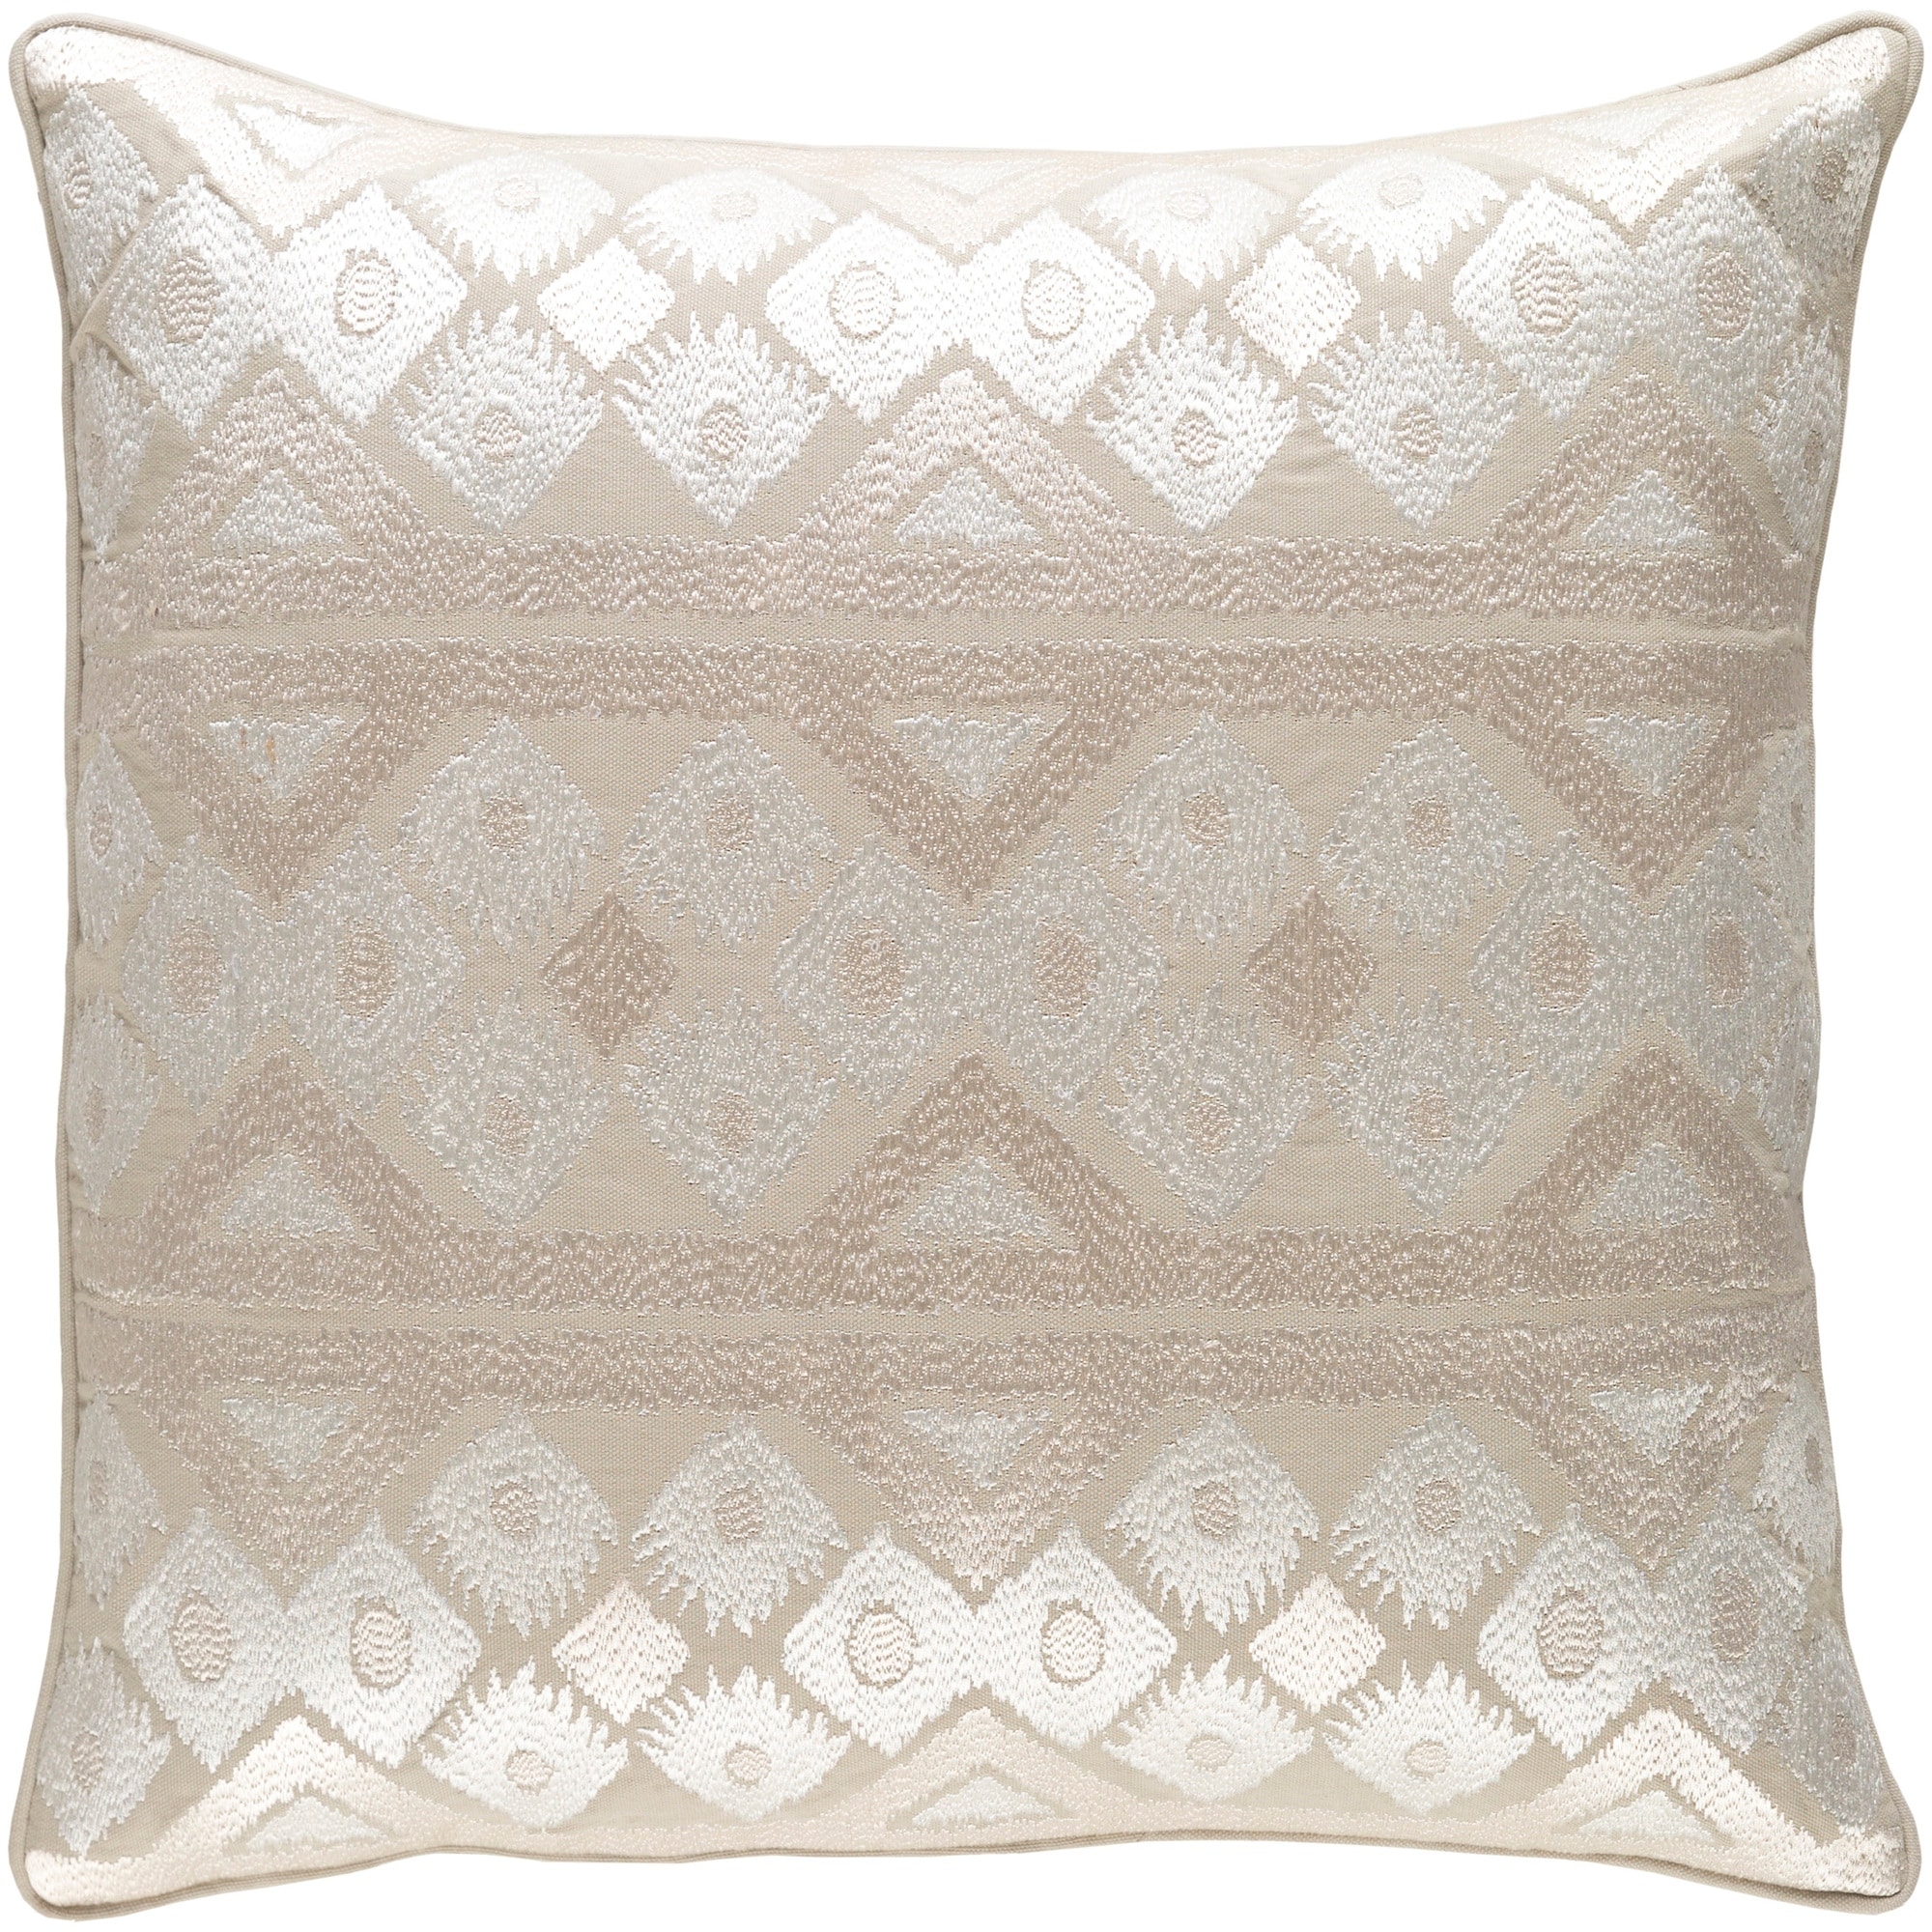 Decorative Sigatoka Khaki 22-inch Throw Pillow Cover